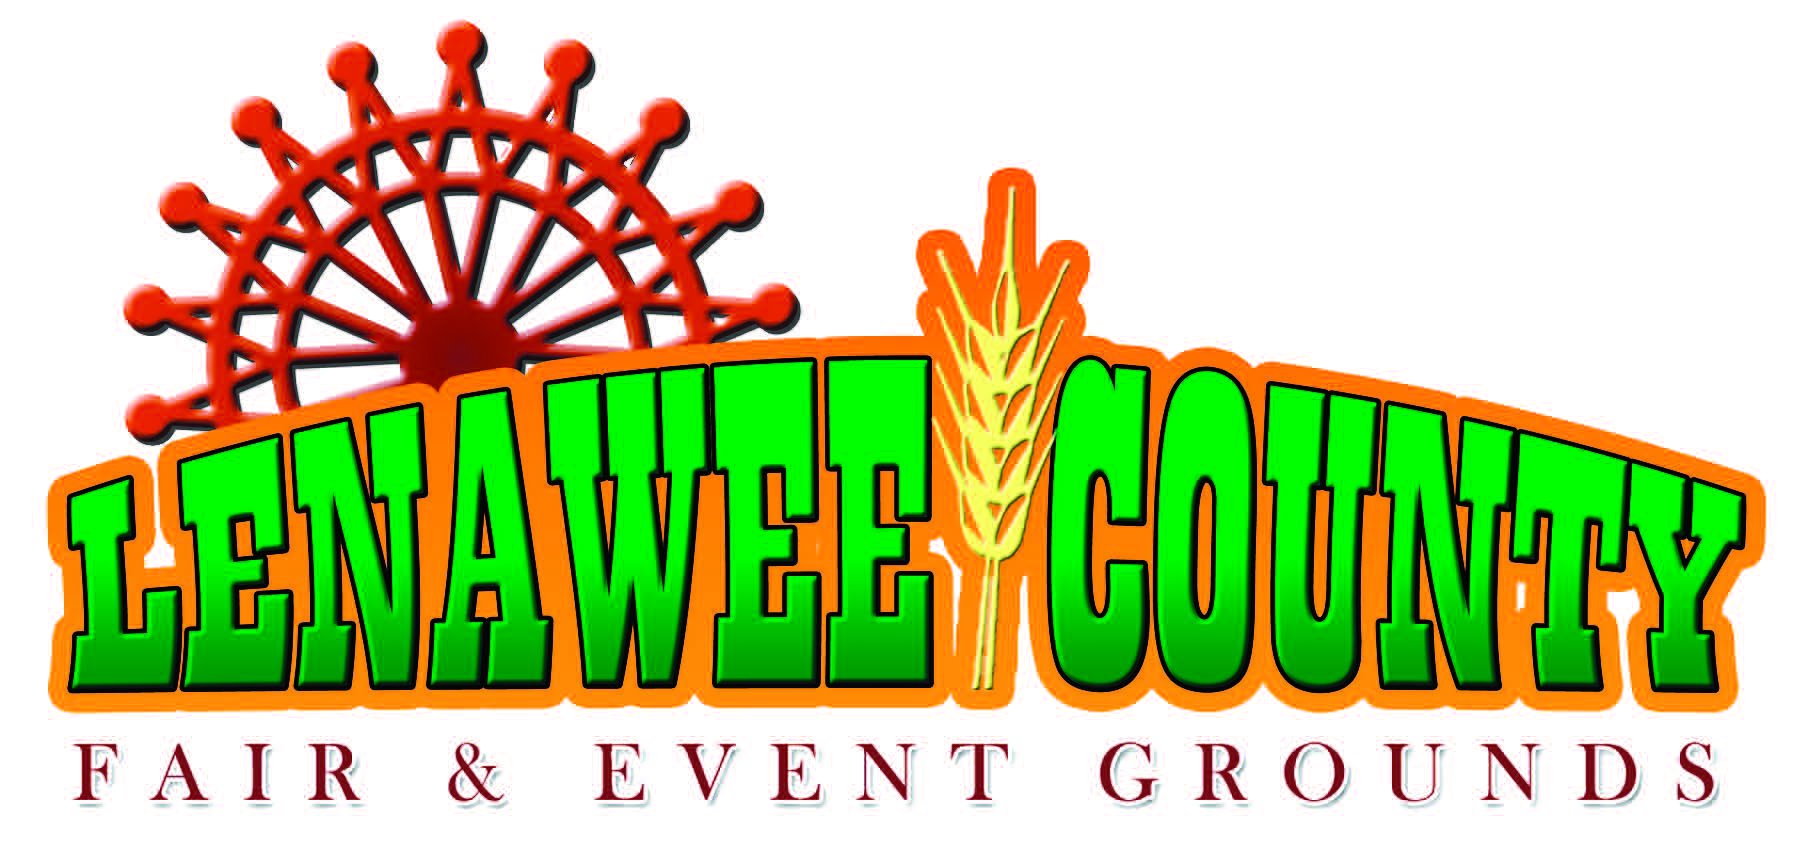 lenawee county fair Creek Enterprise, Inc.